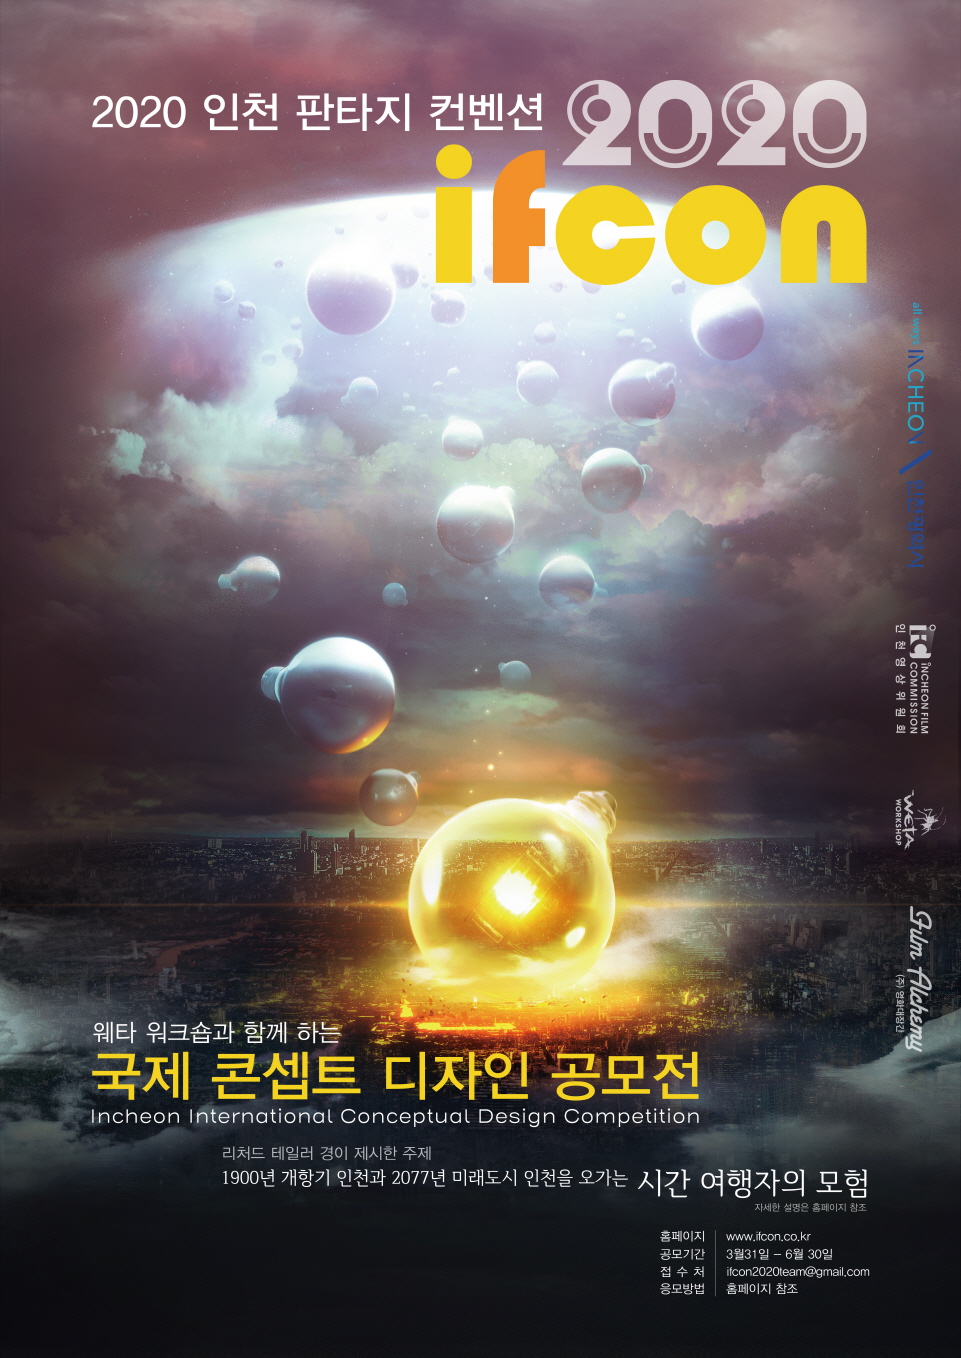 2020 ifocn 인천 국제 콘셉트 디자인 공모전